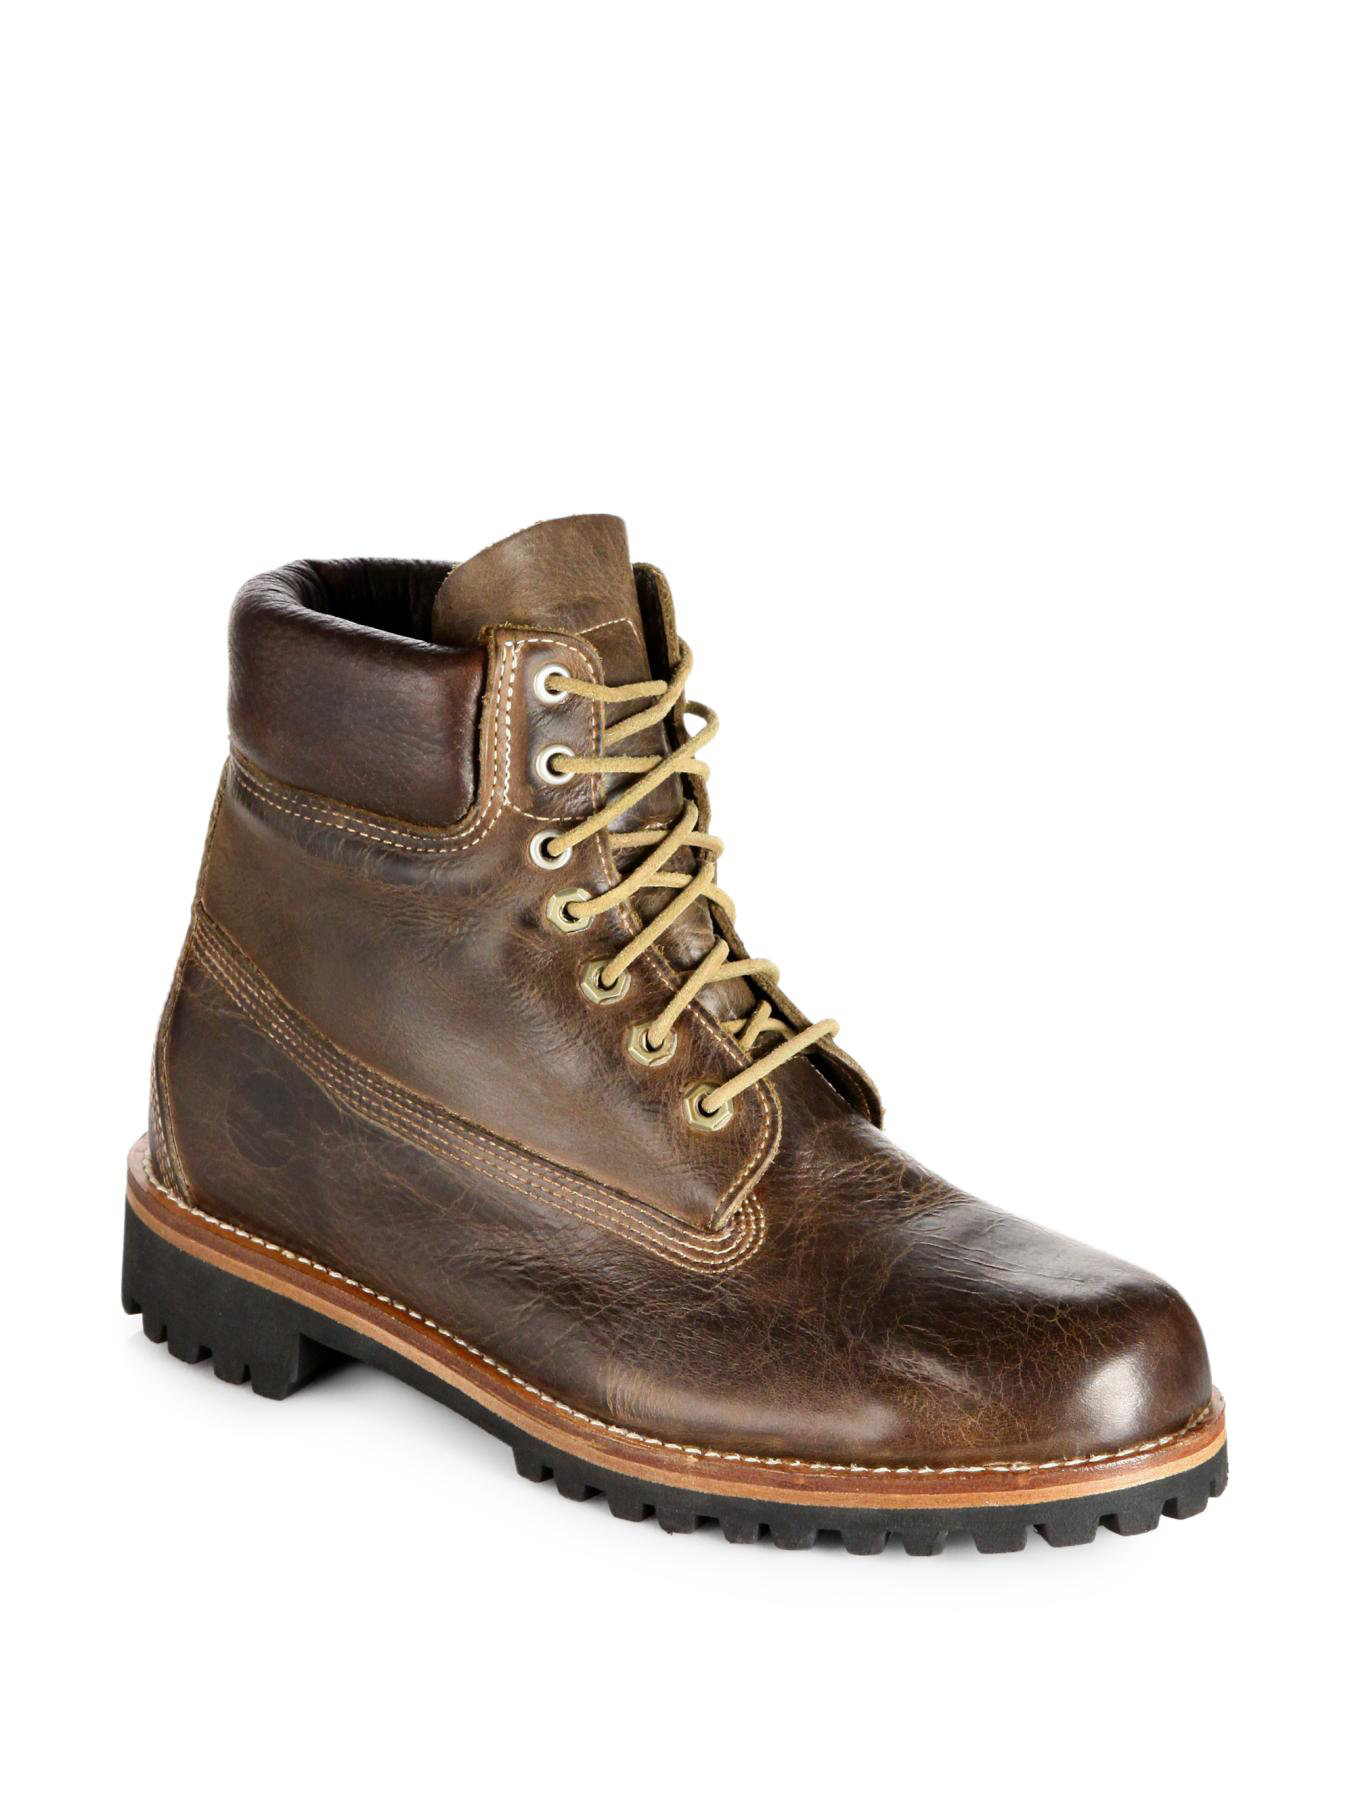 Timberland Earthkeepers Heritage Rugged Waterproof Boots in Dark Brown  (Brown) for Men - Lyst